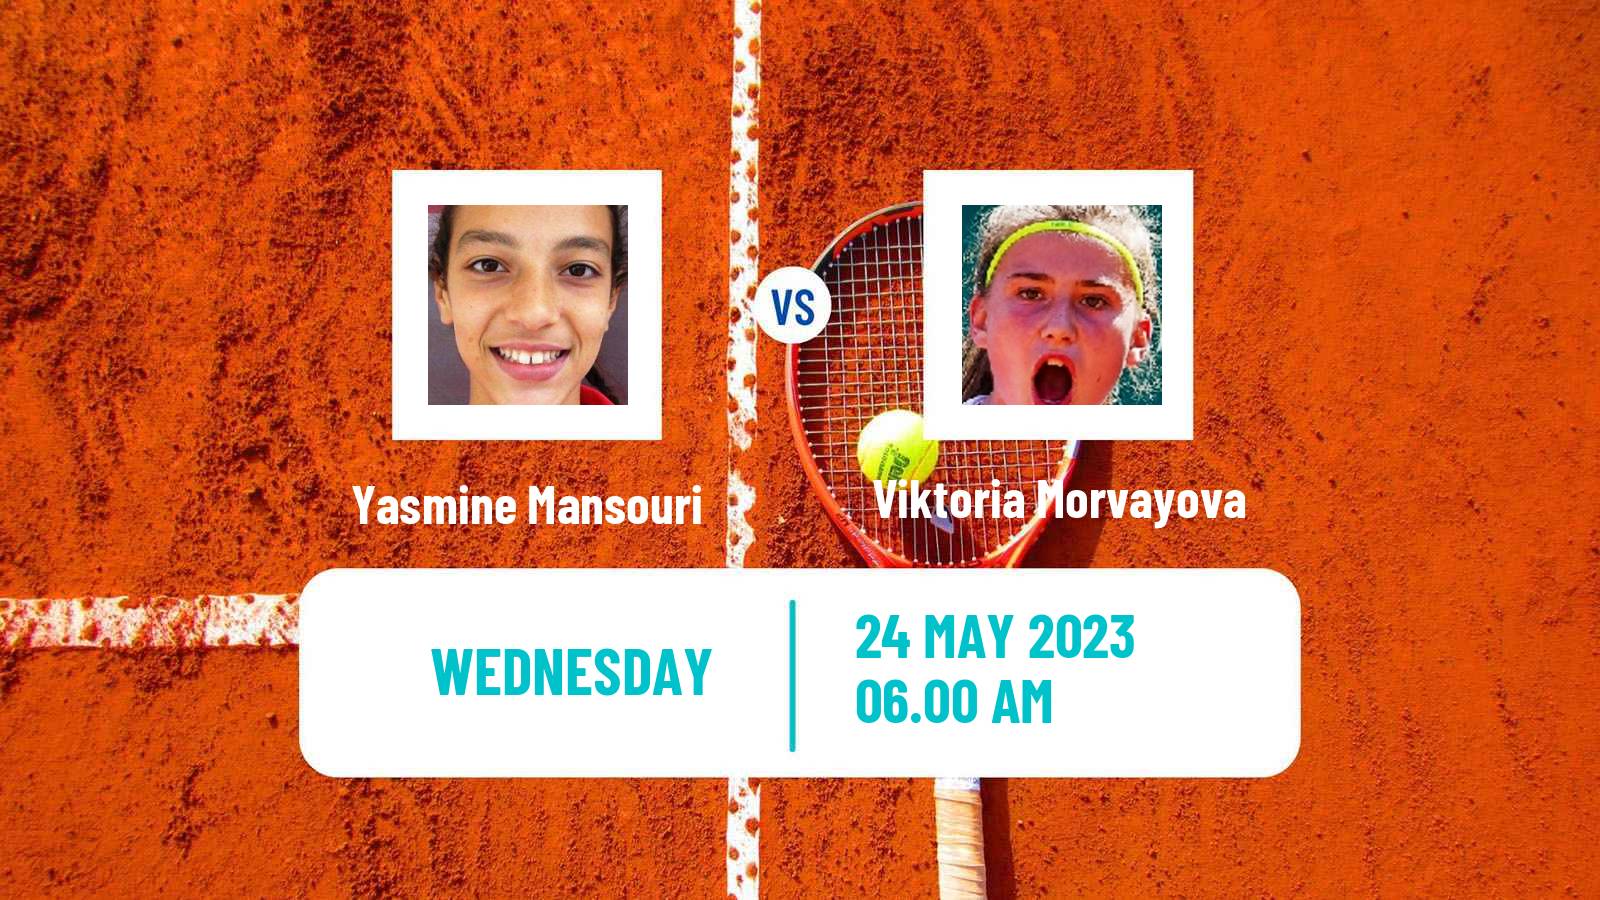 Tennis ITF W25 Monastir 3 Women Yasmine Mansouri - Viktoria Morvayova